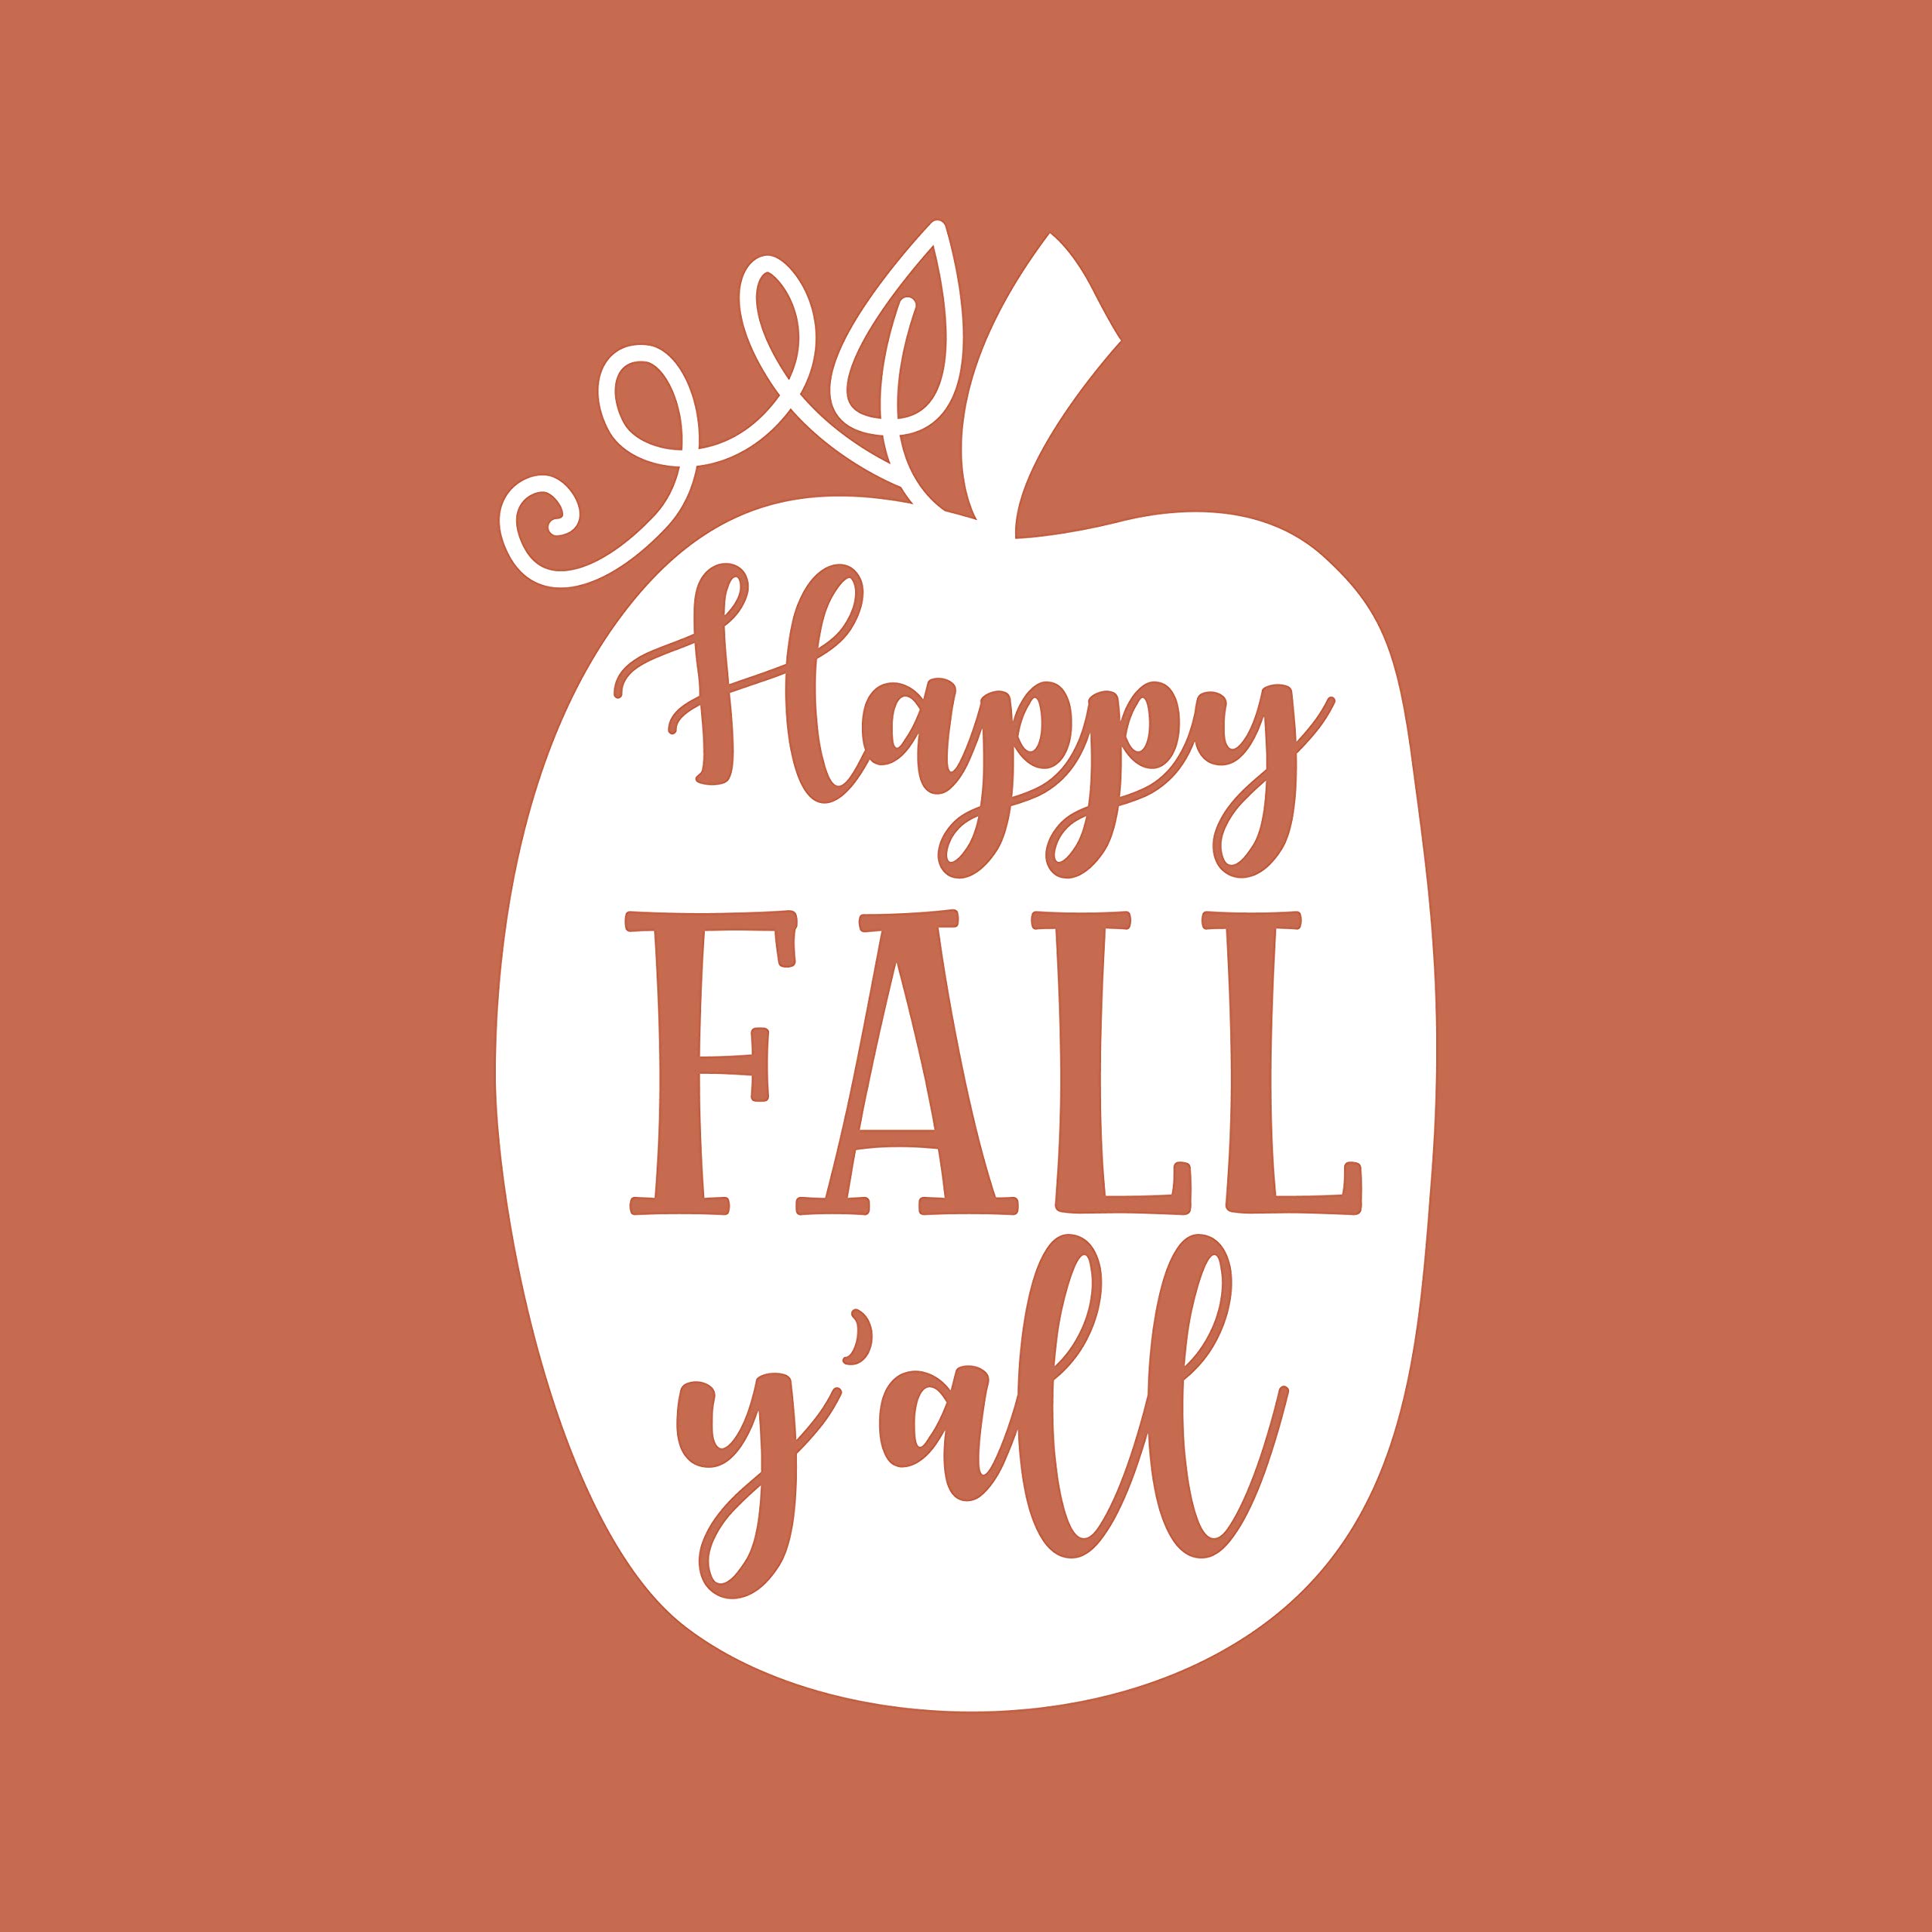 Vinyl Wall Art Decal - Happy Fall Y'all - 26.5" x 17" - Trendy Fall Season Cute Pumpkin Design Quote Sticker for Office Coffee Shop Store School Entryway Door Windows Kitchen Decor (White)